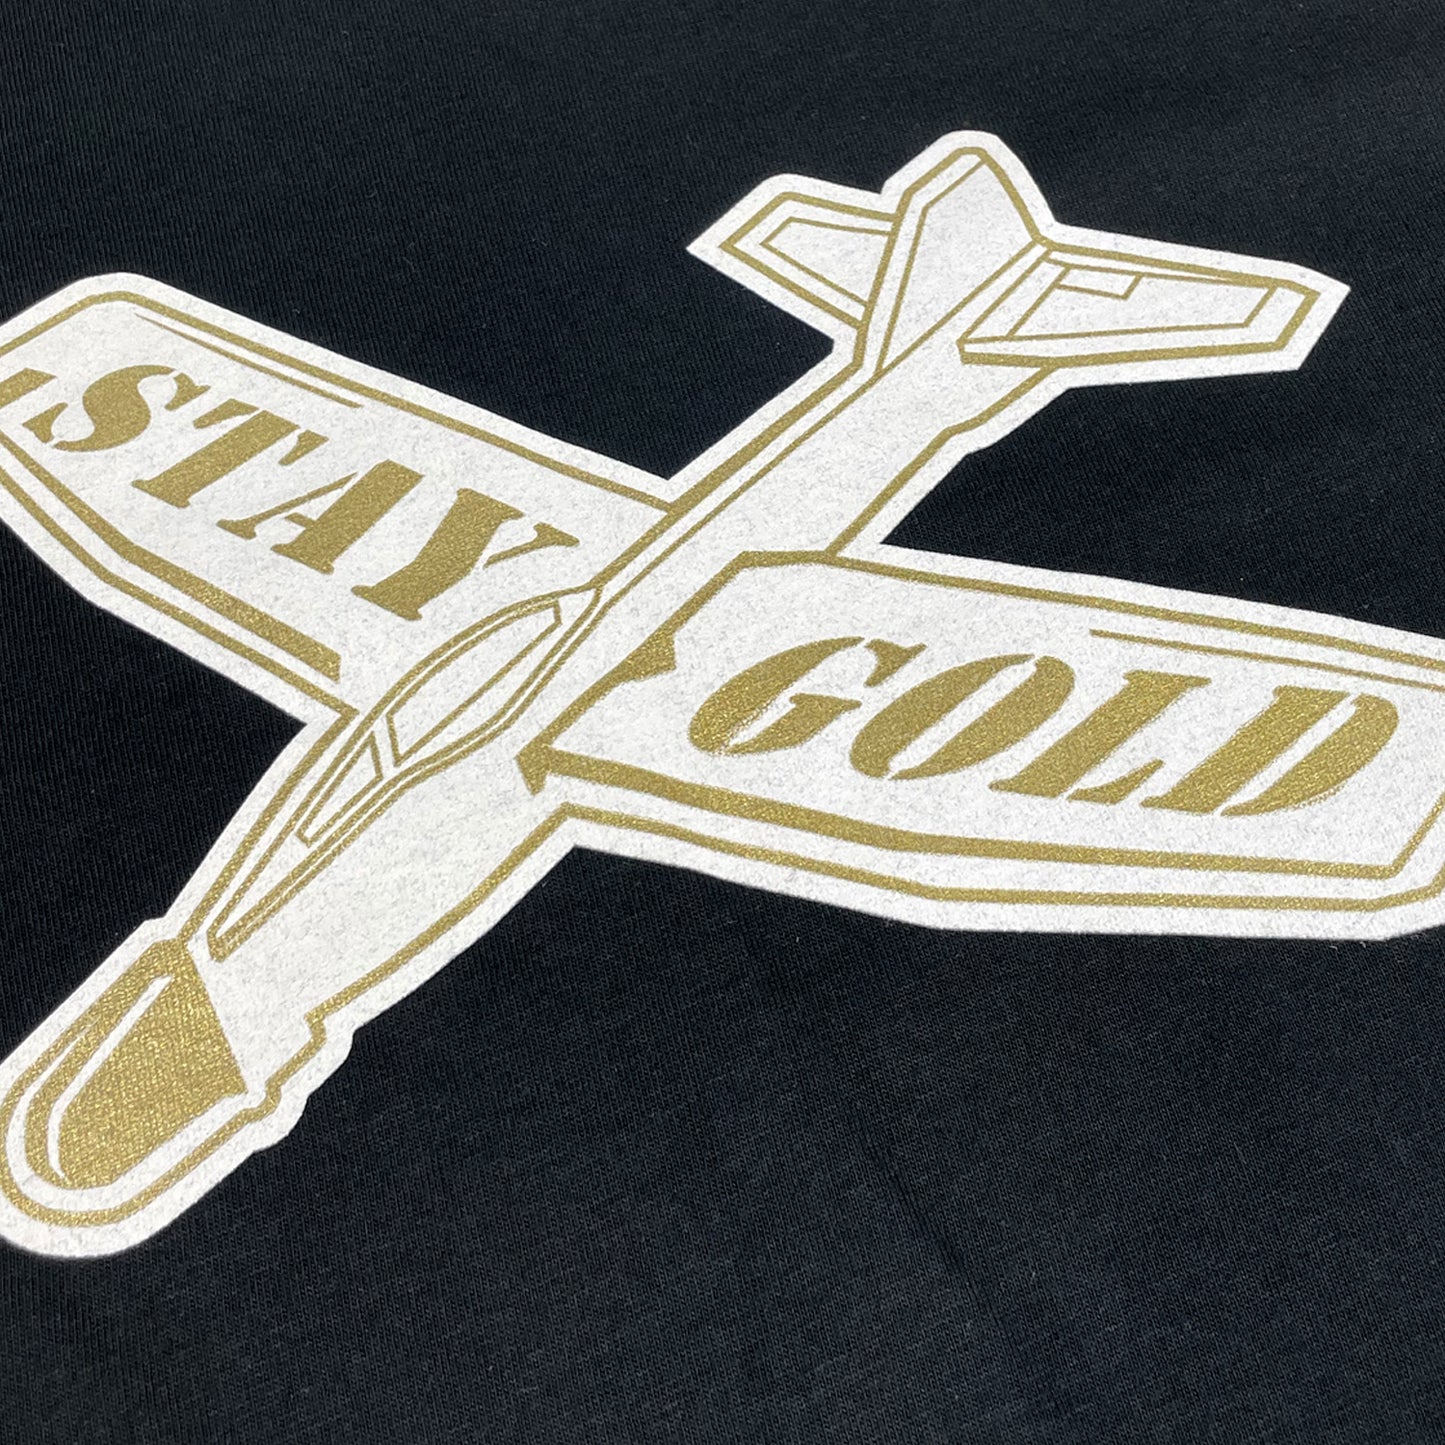 Stay Gold Glider Tee - Black